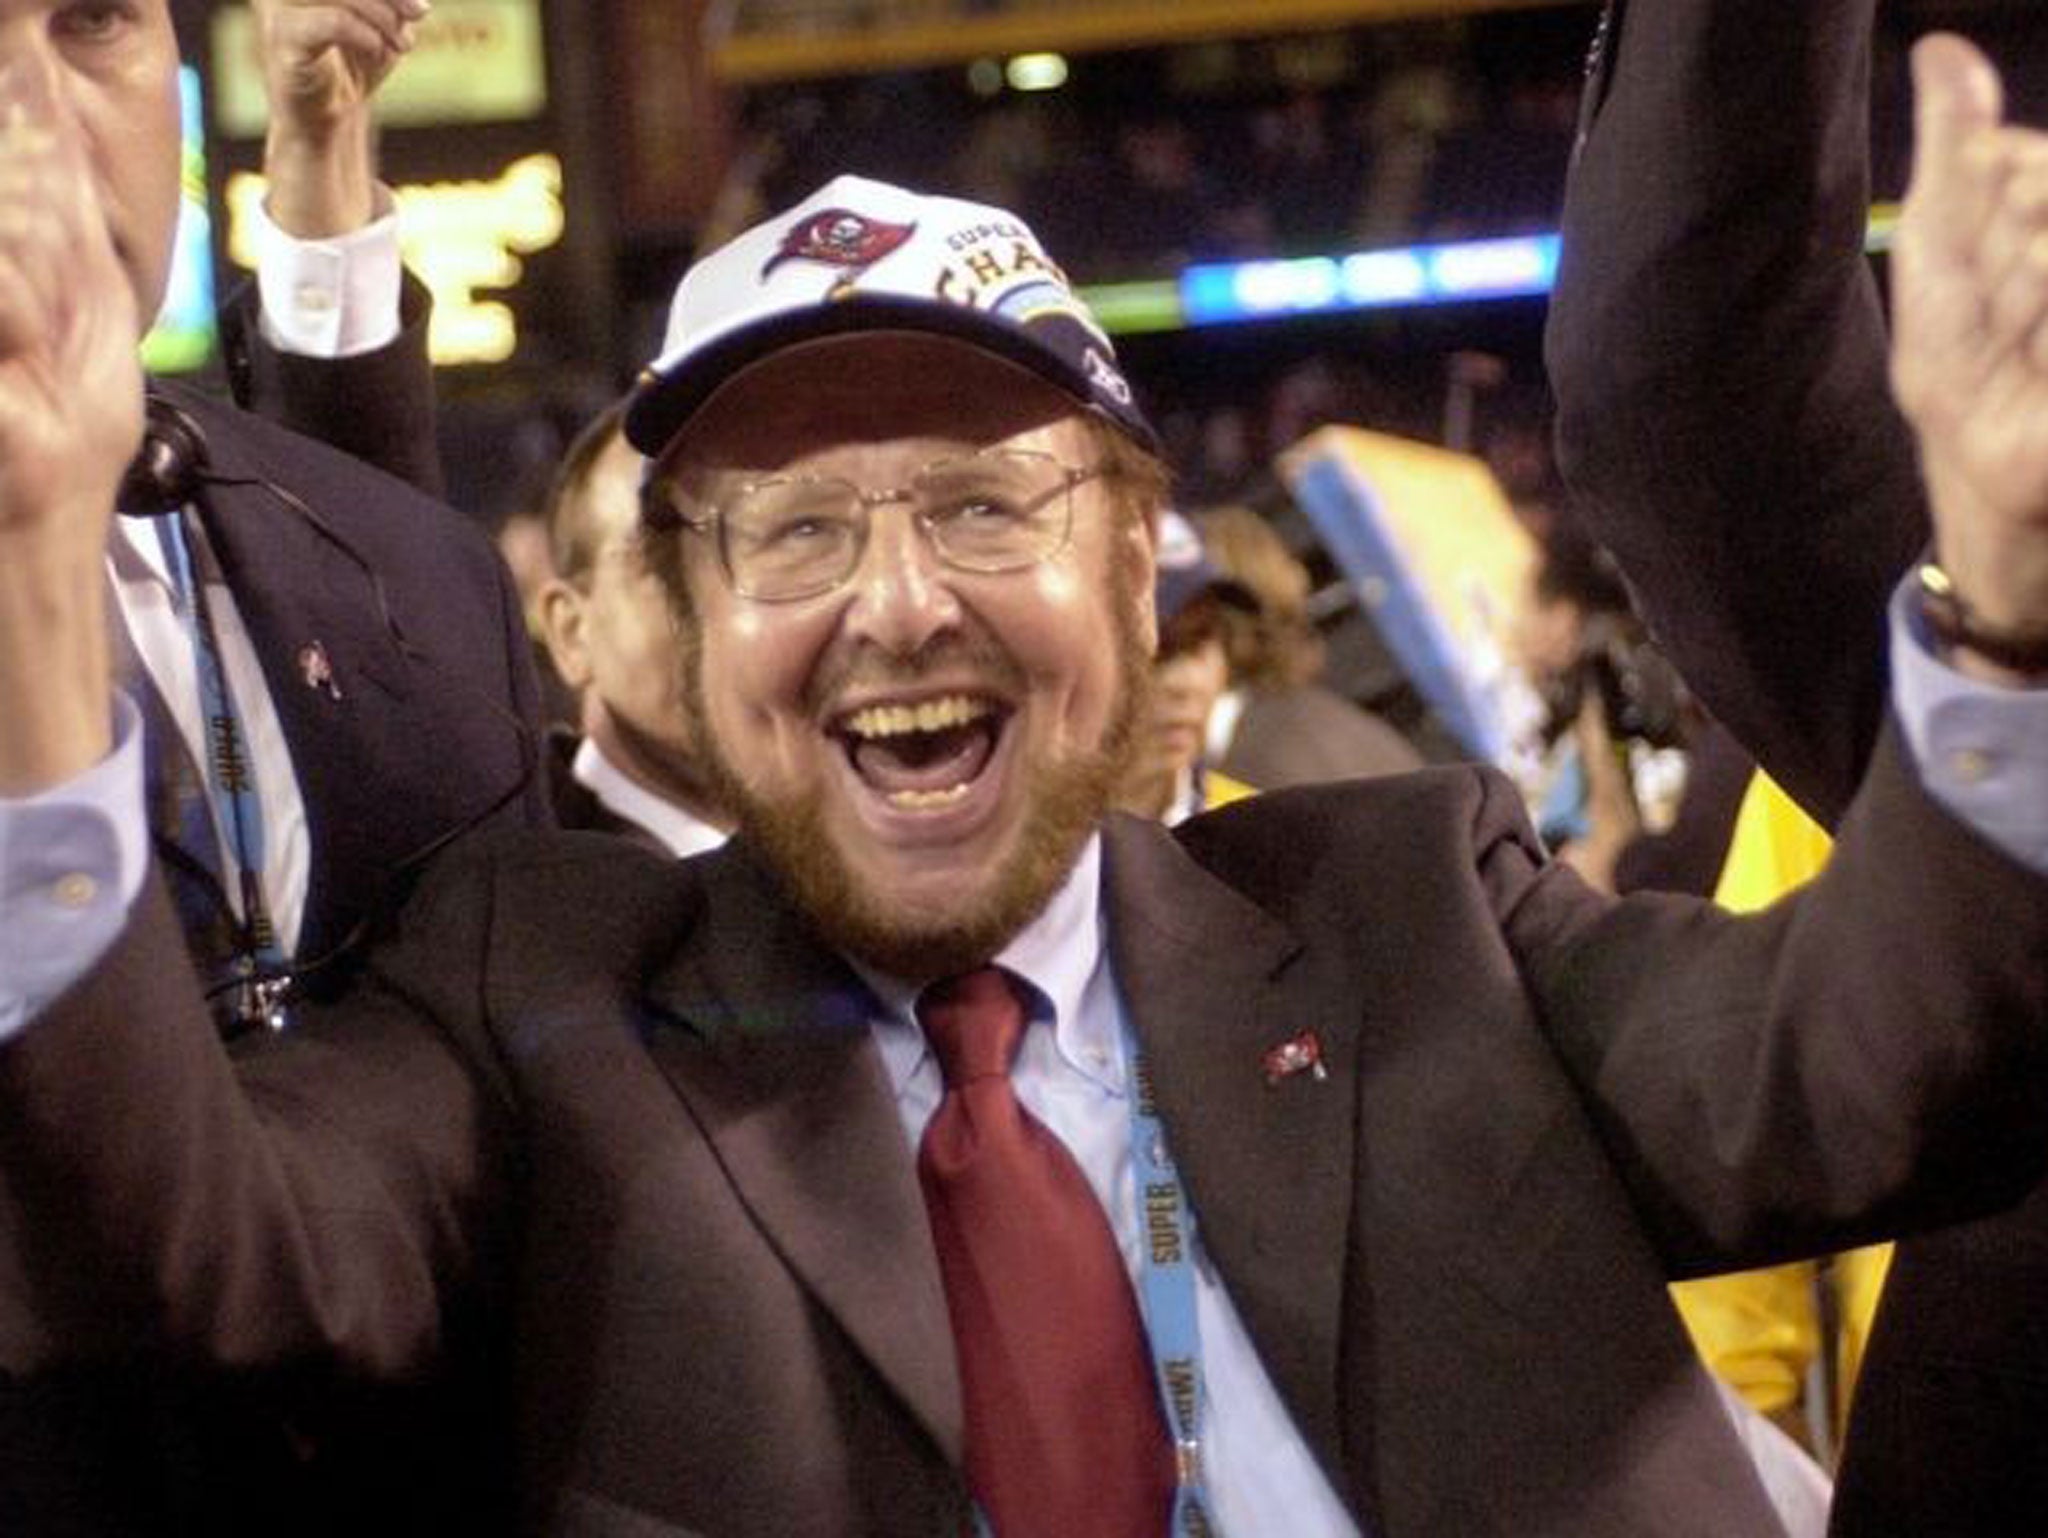 Glazer celebrates the Tampa Bay Buccaneers’ Super Bowl triumph in 2003